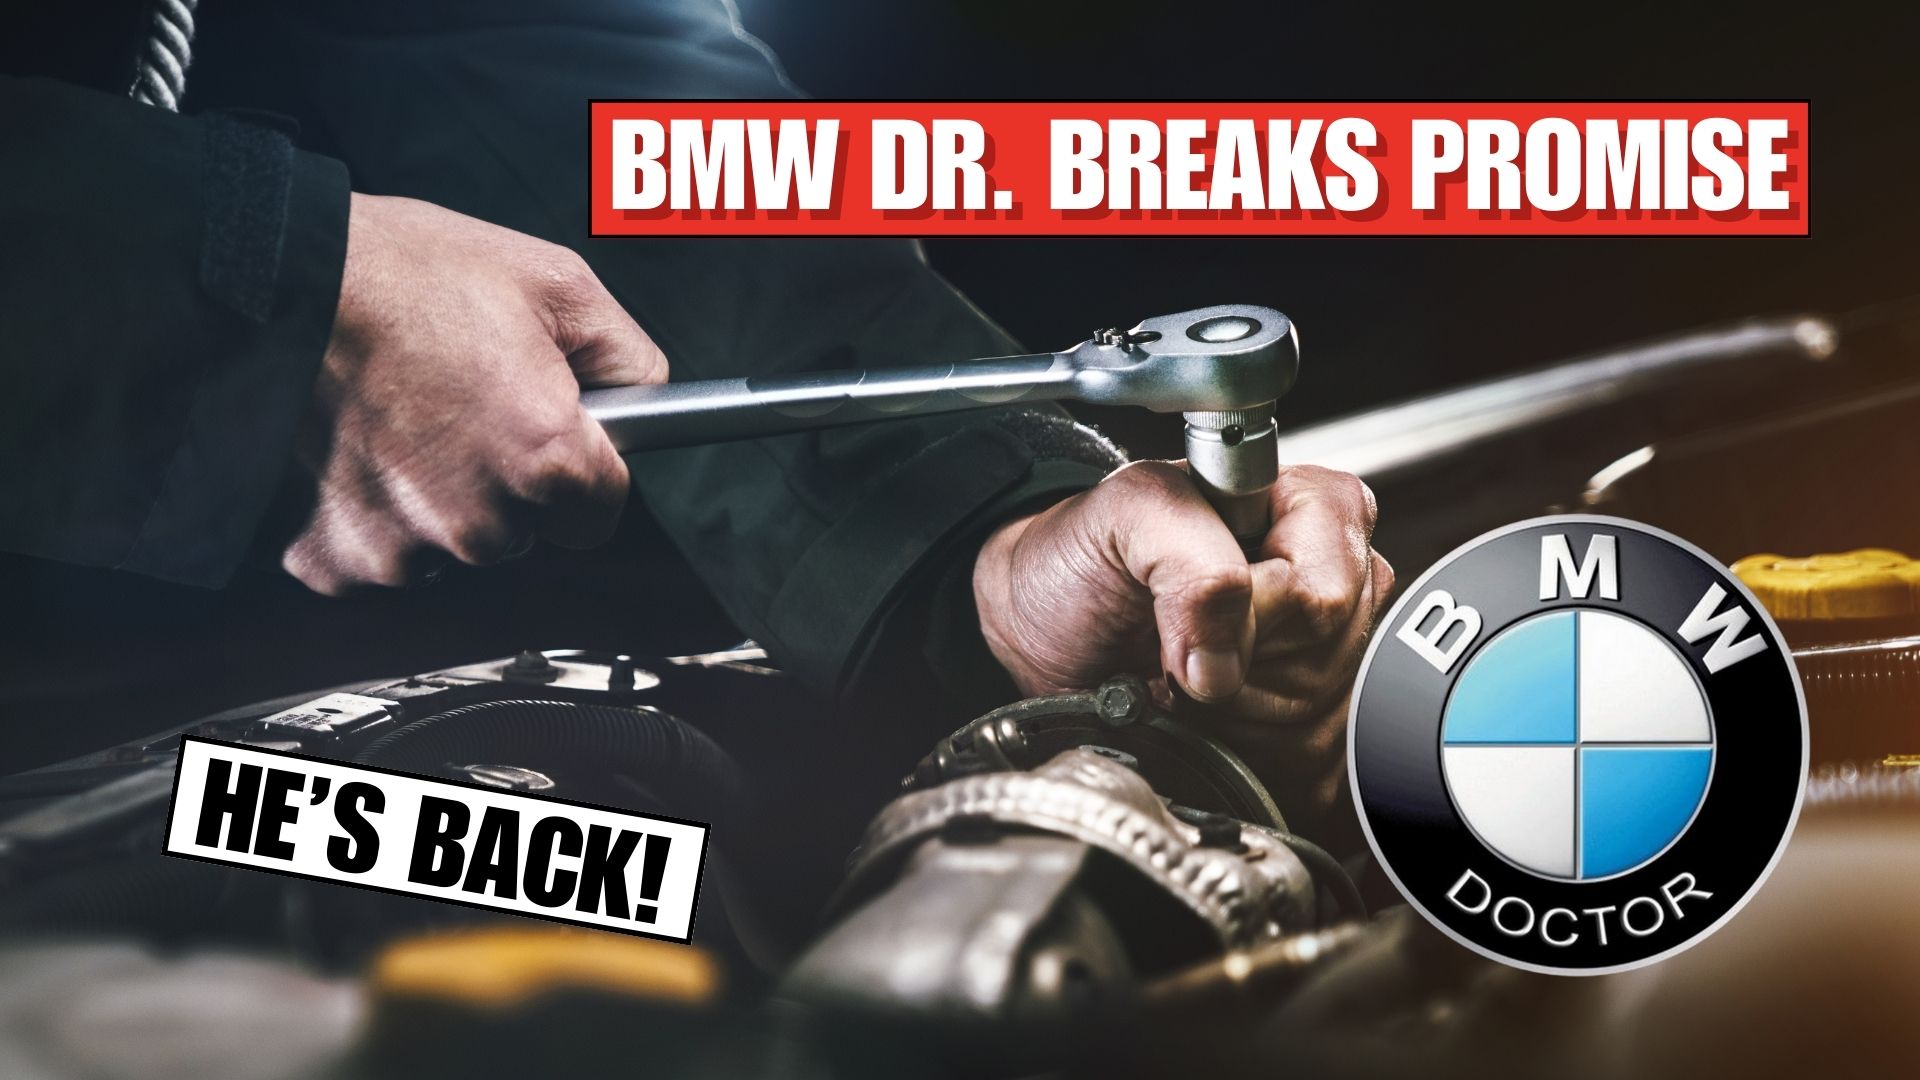 BMW Doctor breaks promise